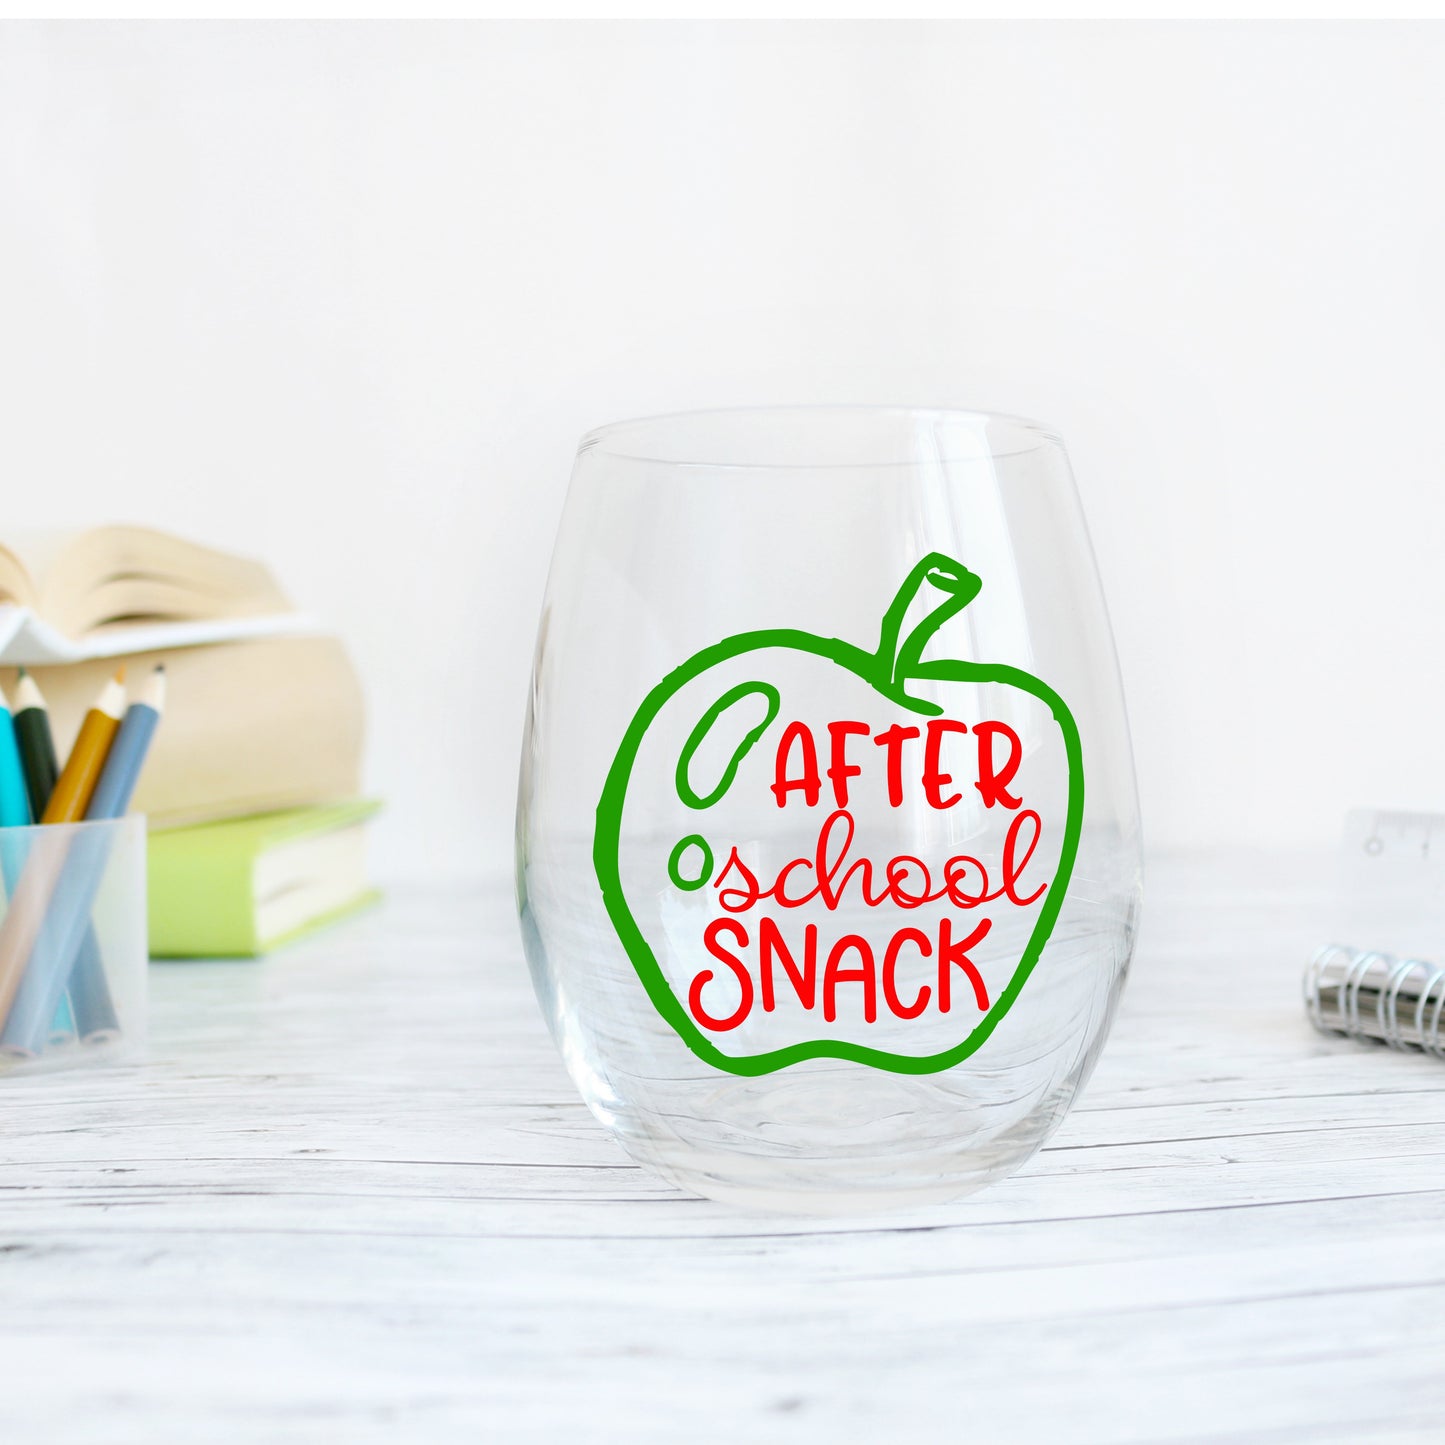 Cute "After school snack" wine glass